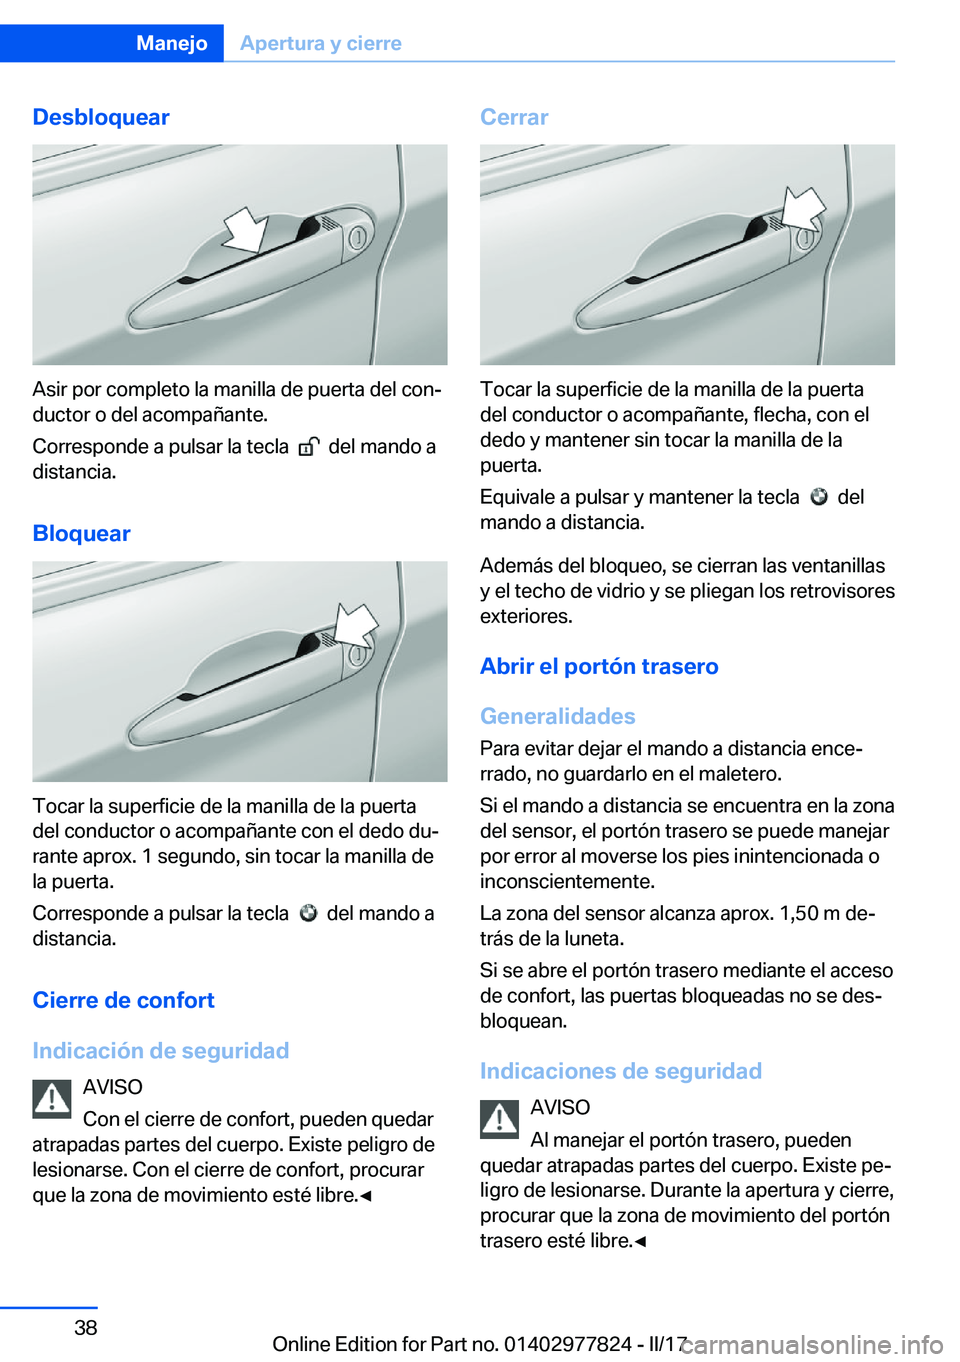 BMW X3 2017  Manuales de Empleo (in Spanish) �D�e�s�b�l�o�q�u�e�a�r
�A�s�i�r� �p�o�r� �c�o�m�p�l�e�t�o� �l�a� �m�a�n�i�l�l�a� �d�e� �p�u�e�r�t�a� �d�e�l� �c�o�nª�d�u�c�t�o�r� �o� �d�e�l� �a�c�o�m�p�a�ñ�a�n�t�e�.
�C�o�r�r�e�s�p�o�n�d�e� �a� �p